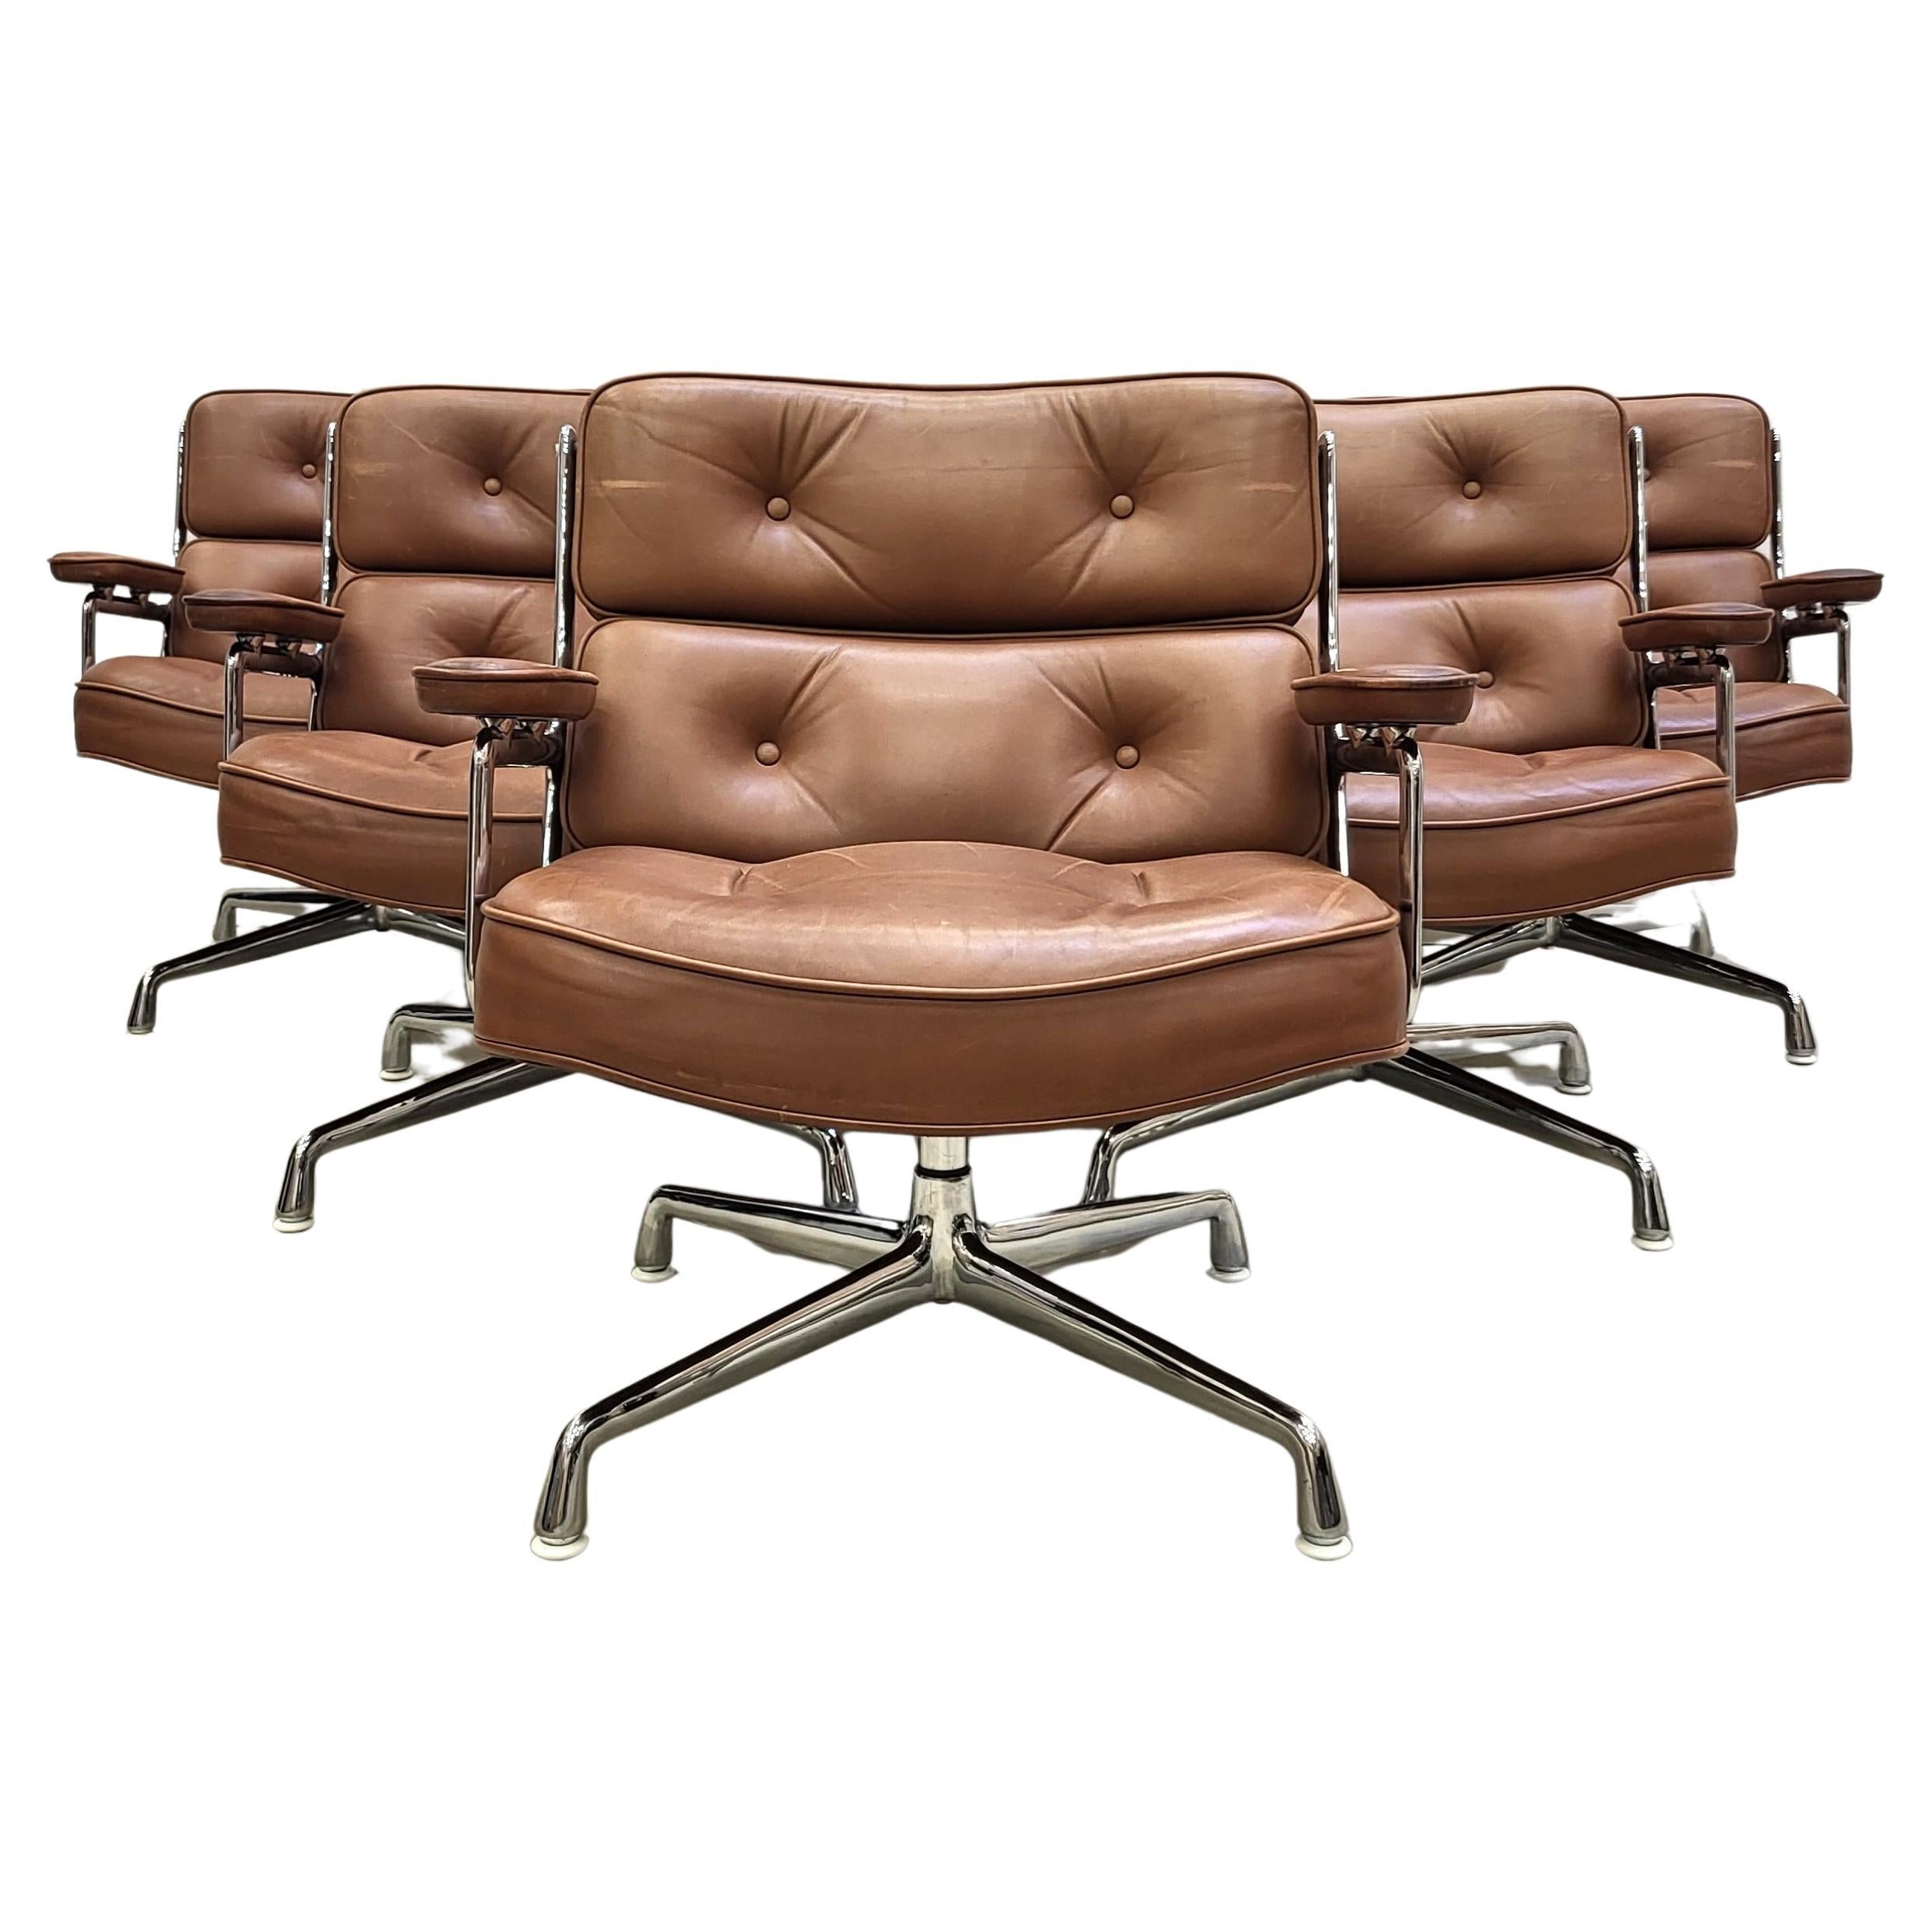 Set of 10 Vitra Herman Miller ES105 Lobby Chair by Charles Eames 1970s